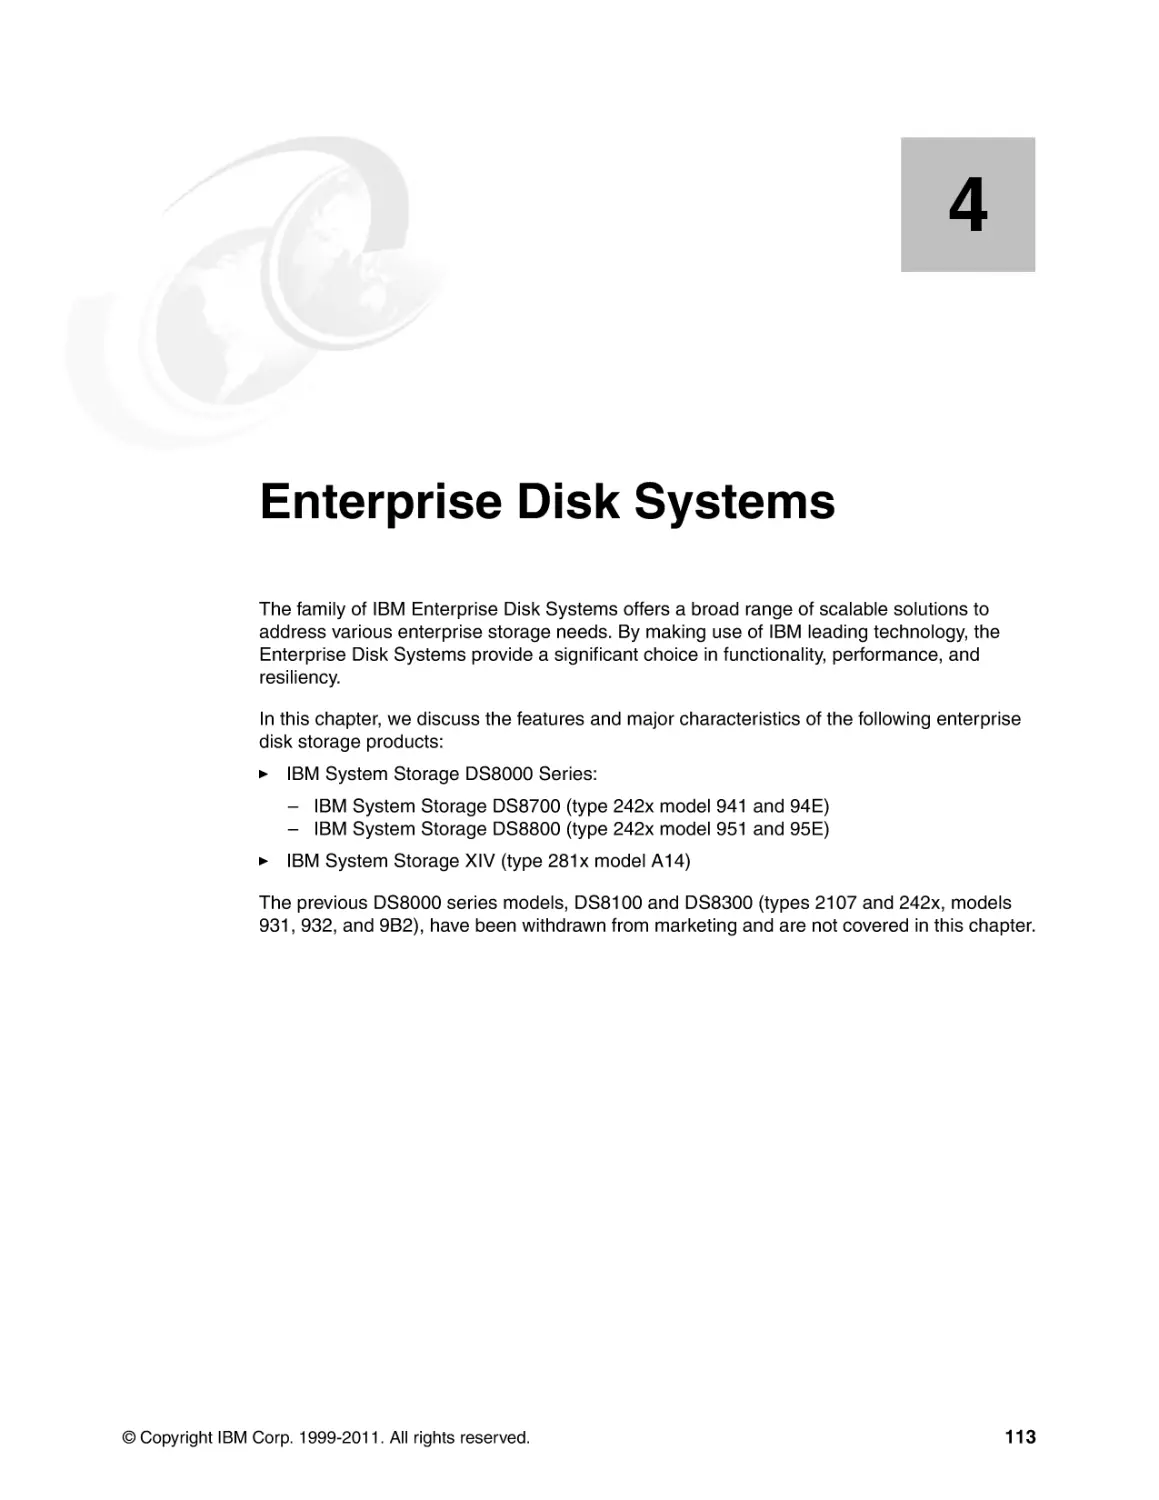 Chapter 4. Enterprise Disk Systems